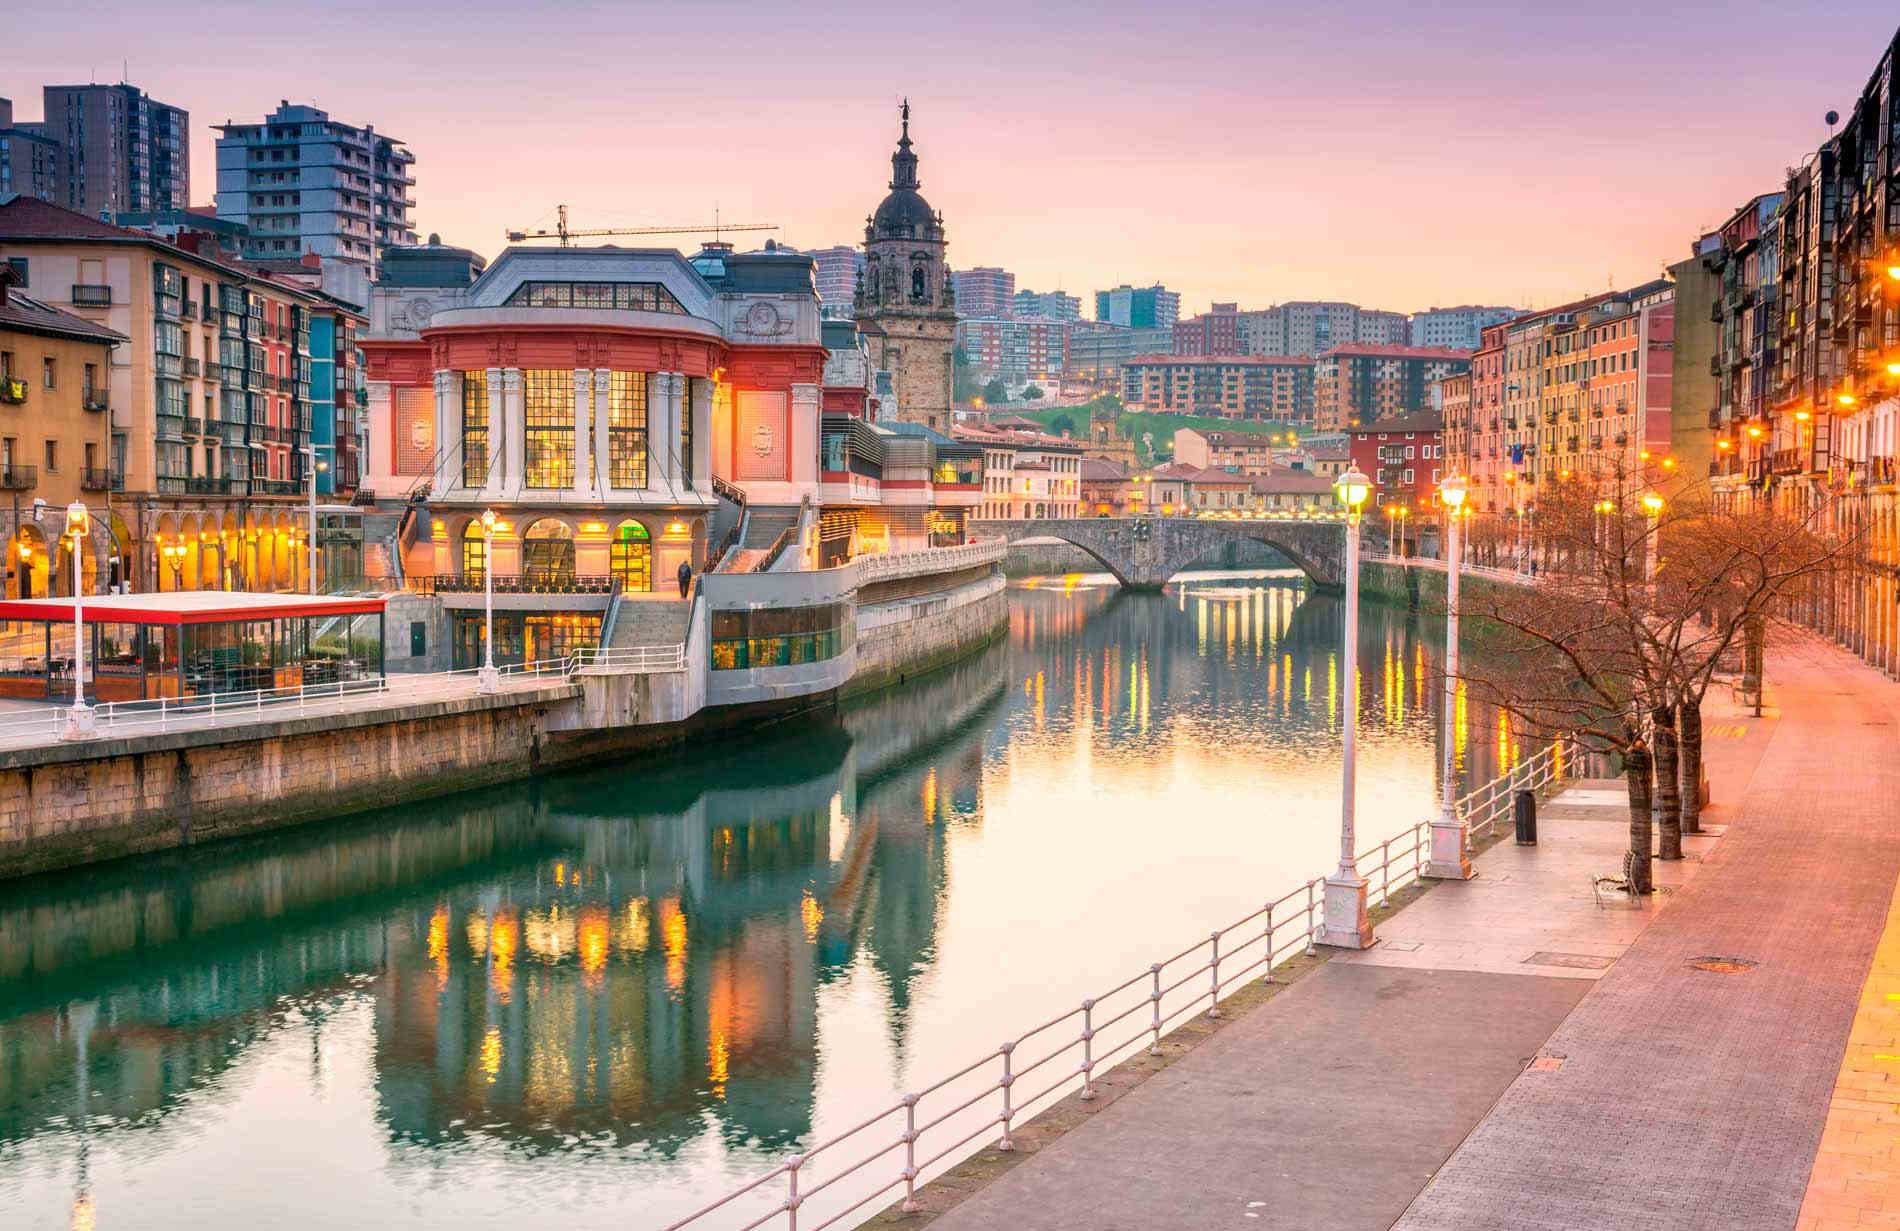 Udane's experience in Bilbao, Spain